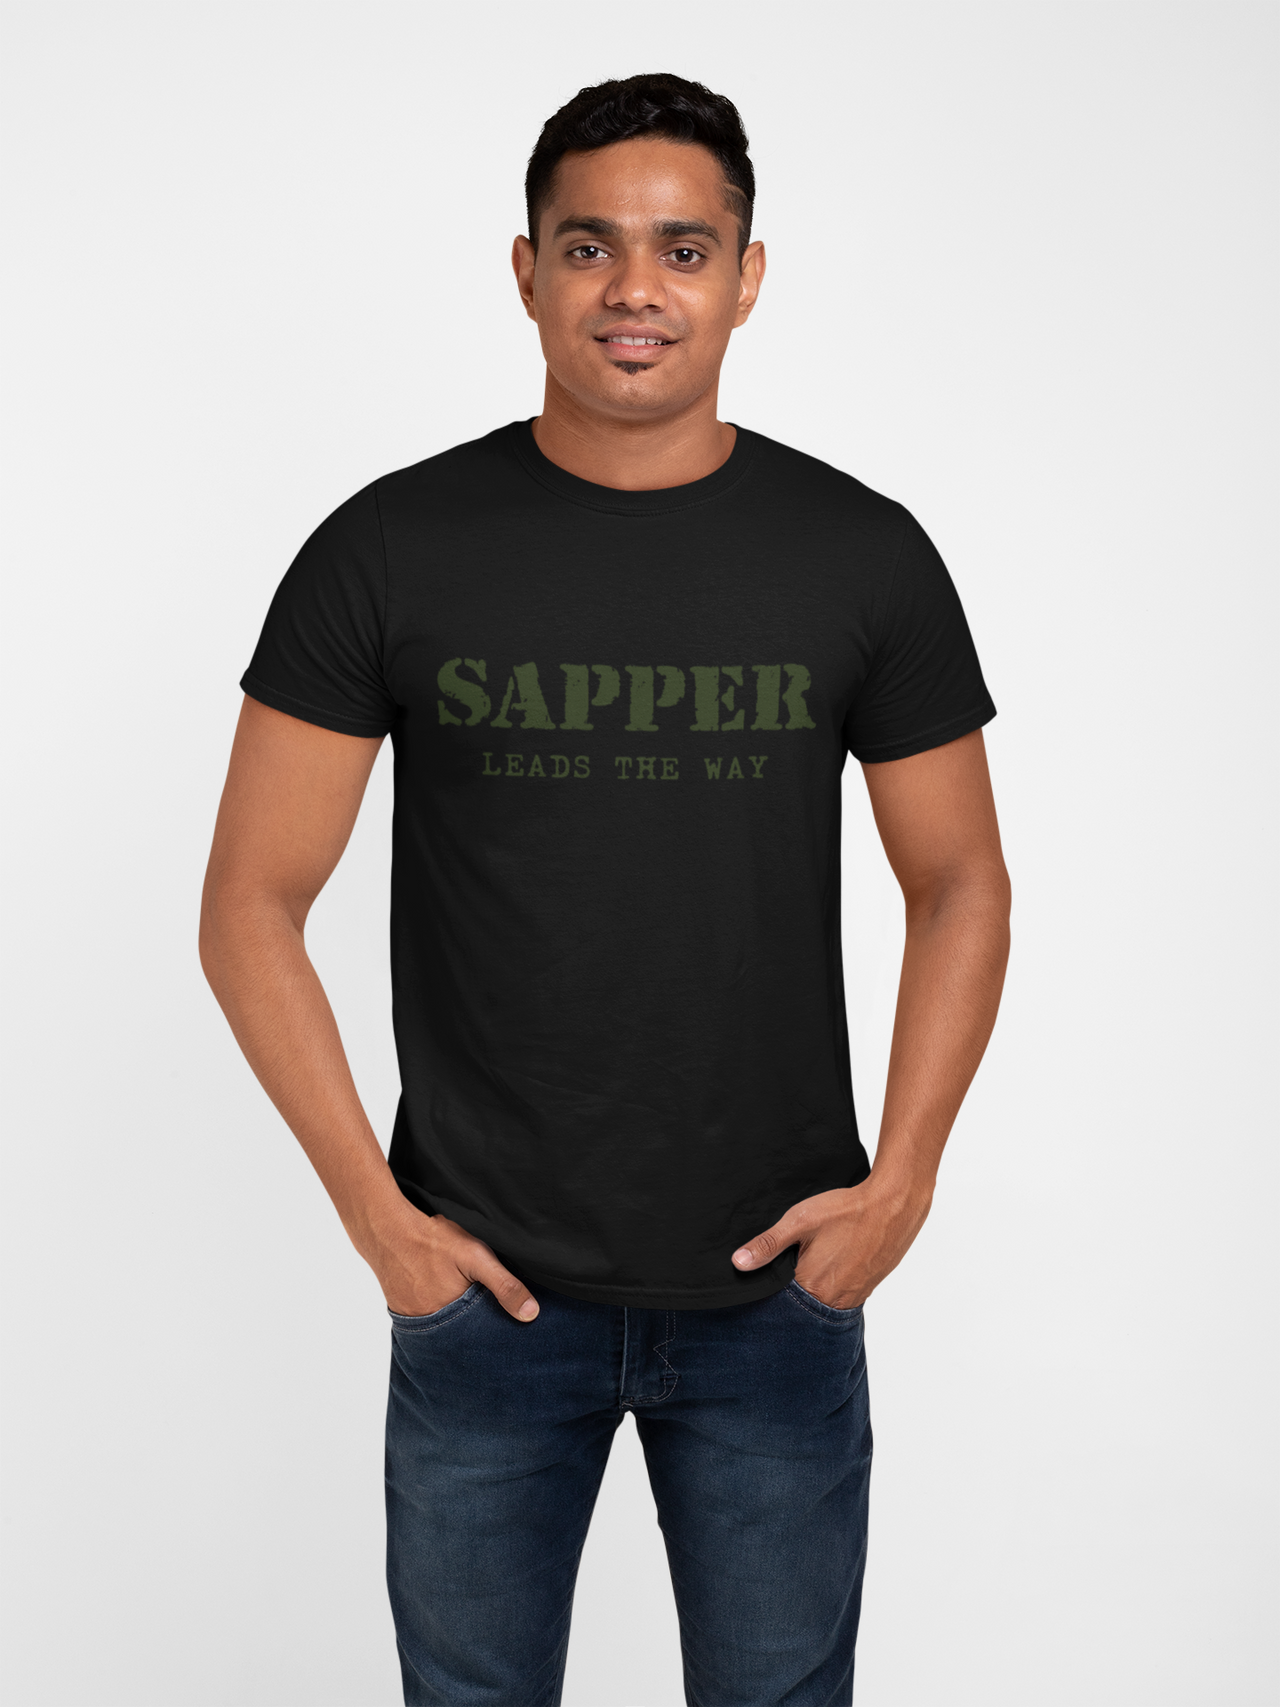 Sapper T-shirt - Leads the Way (Men)